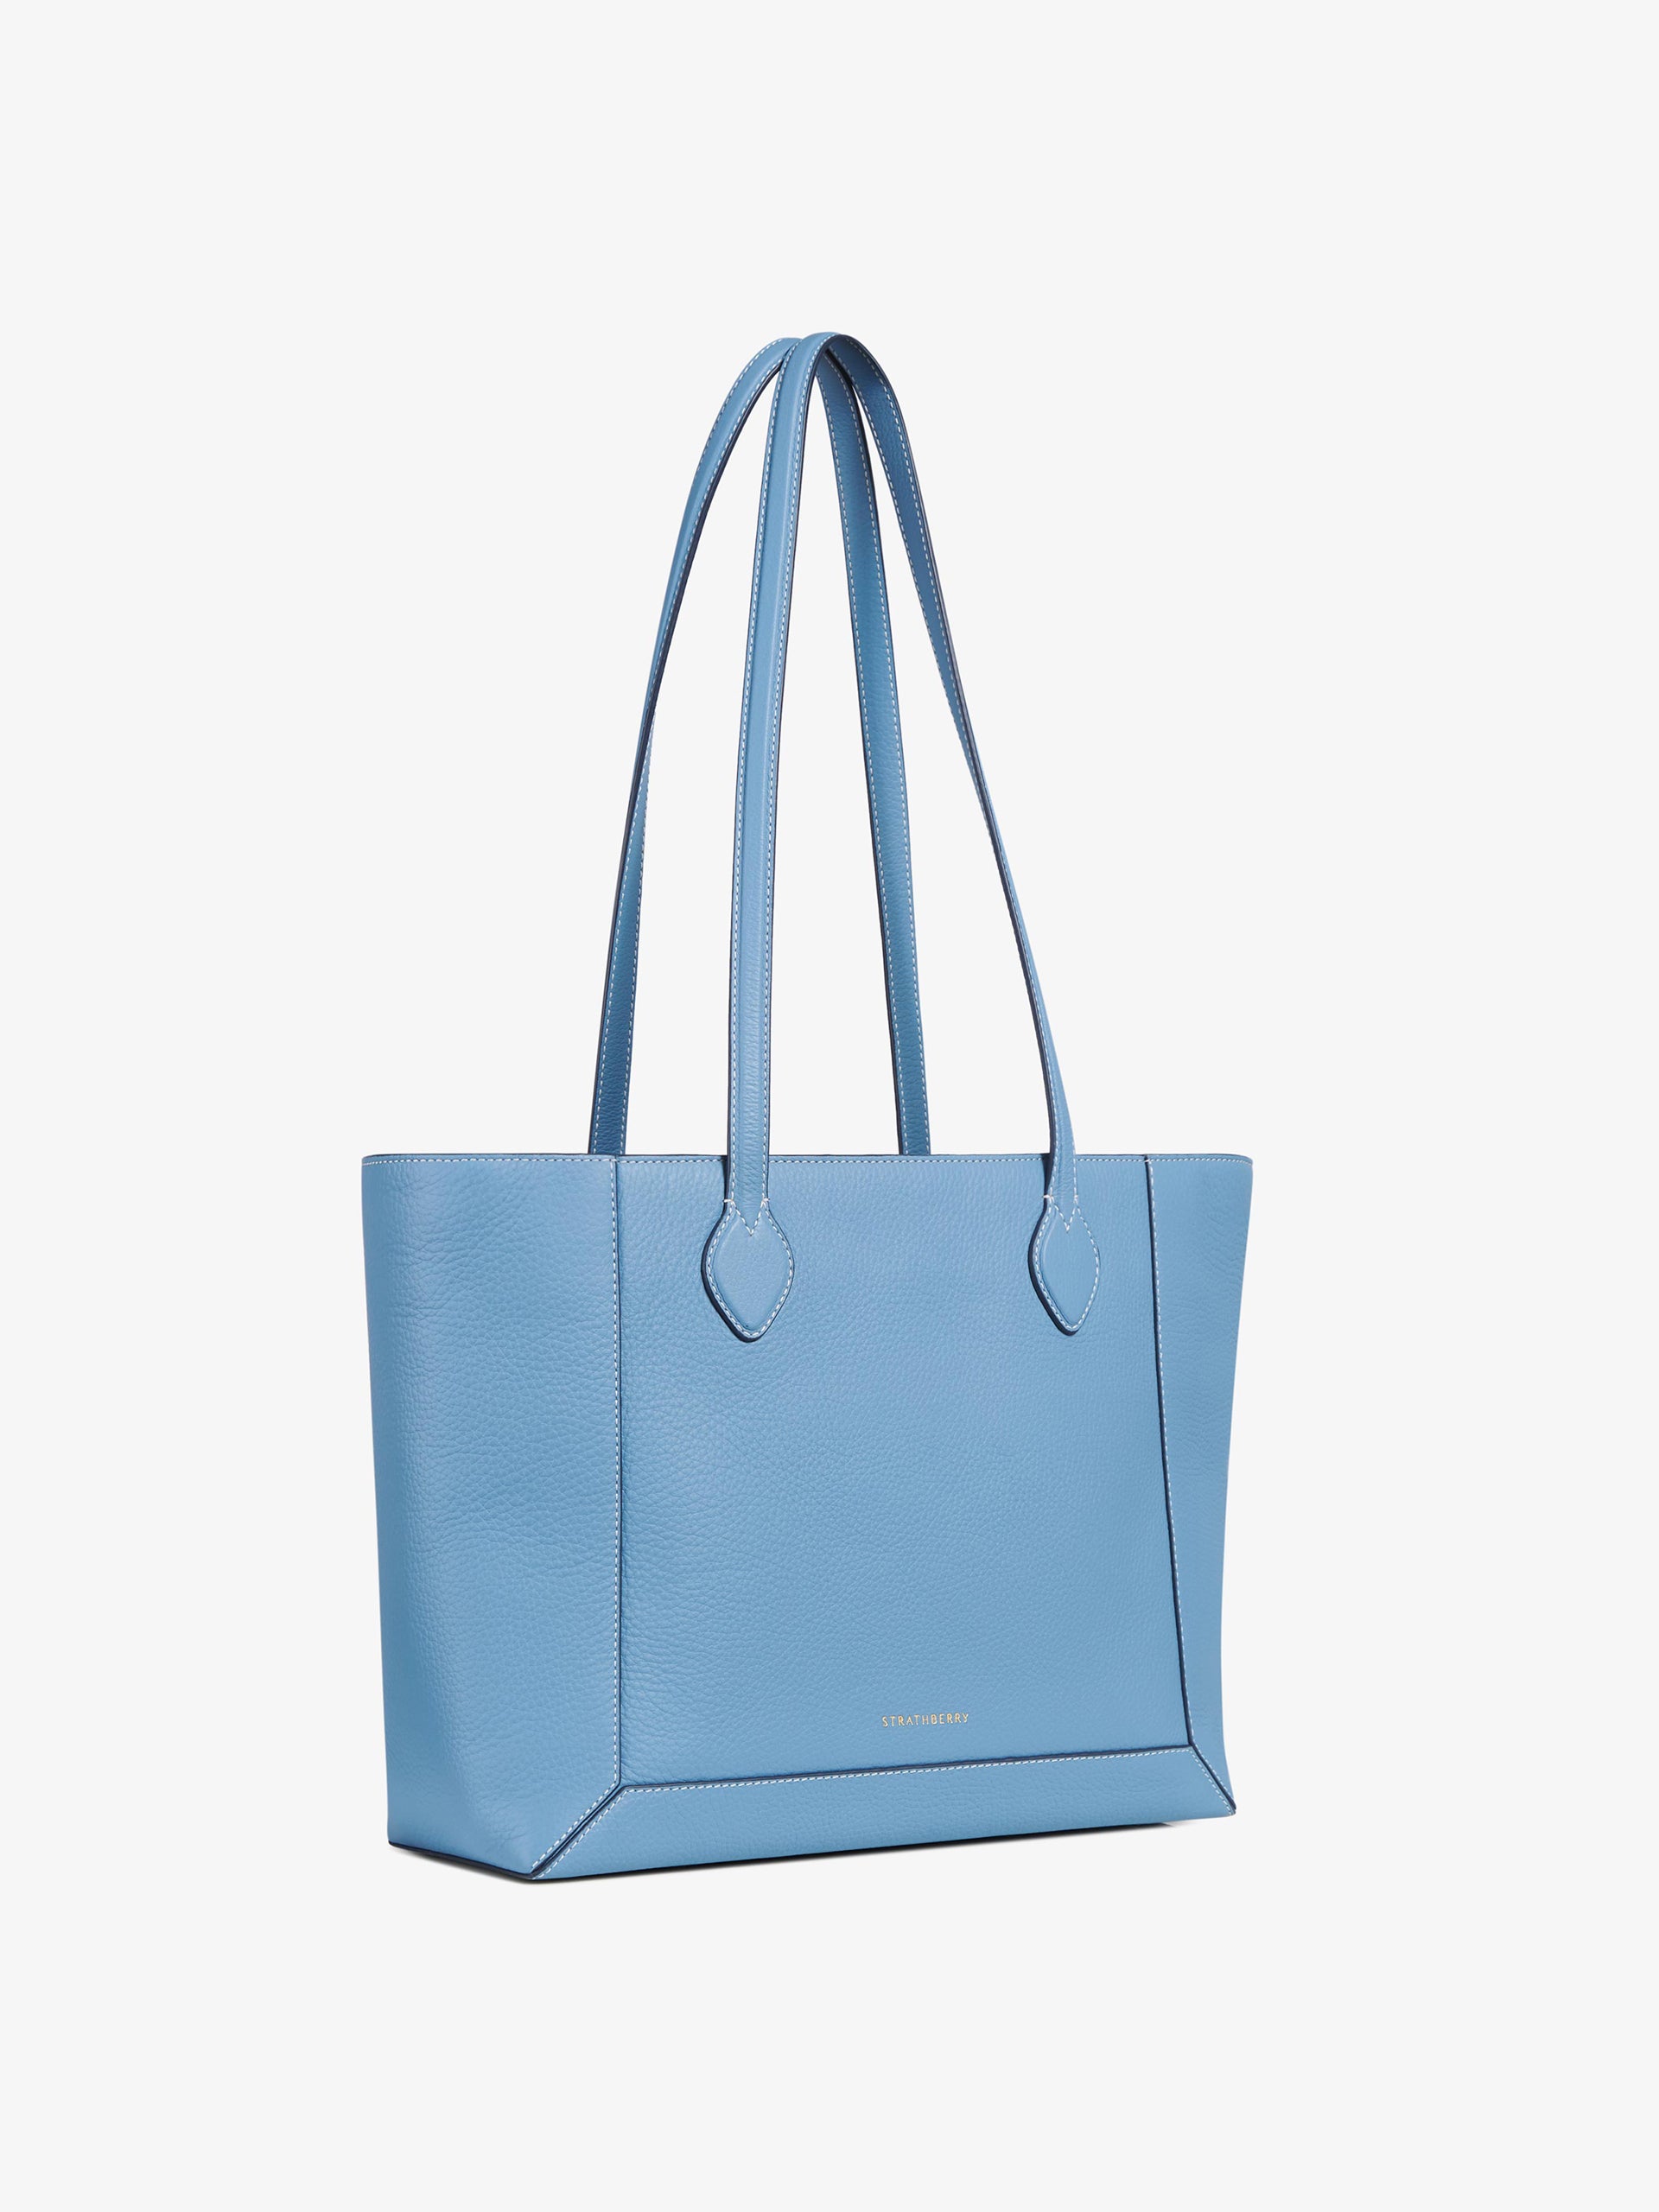 Meori Blue Pocket Shopper Bag - Anderson Lumber